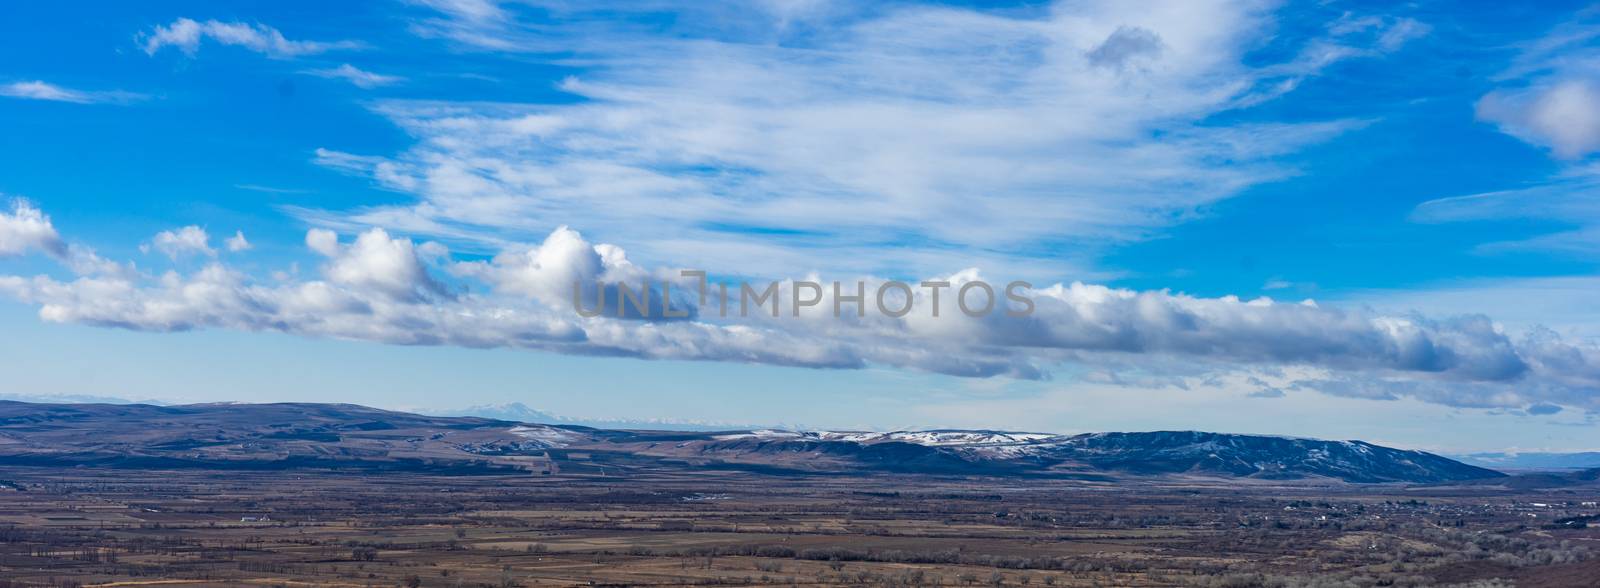 Rural winter landscape in Kakheti region with bright blue sky